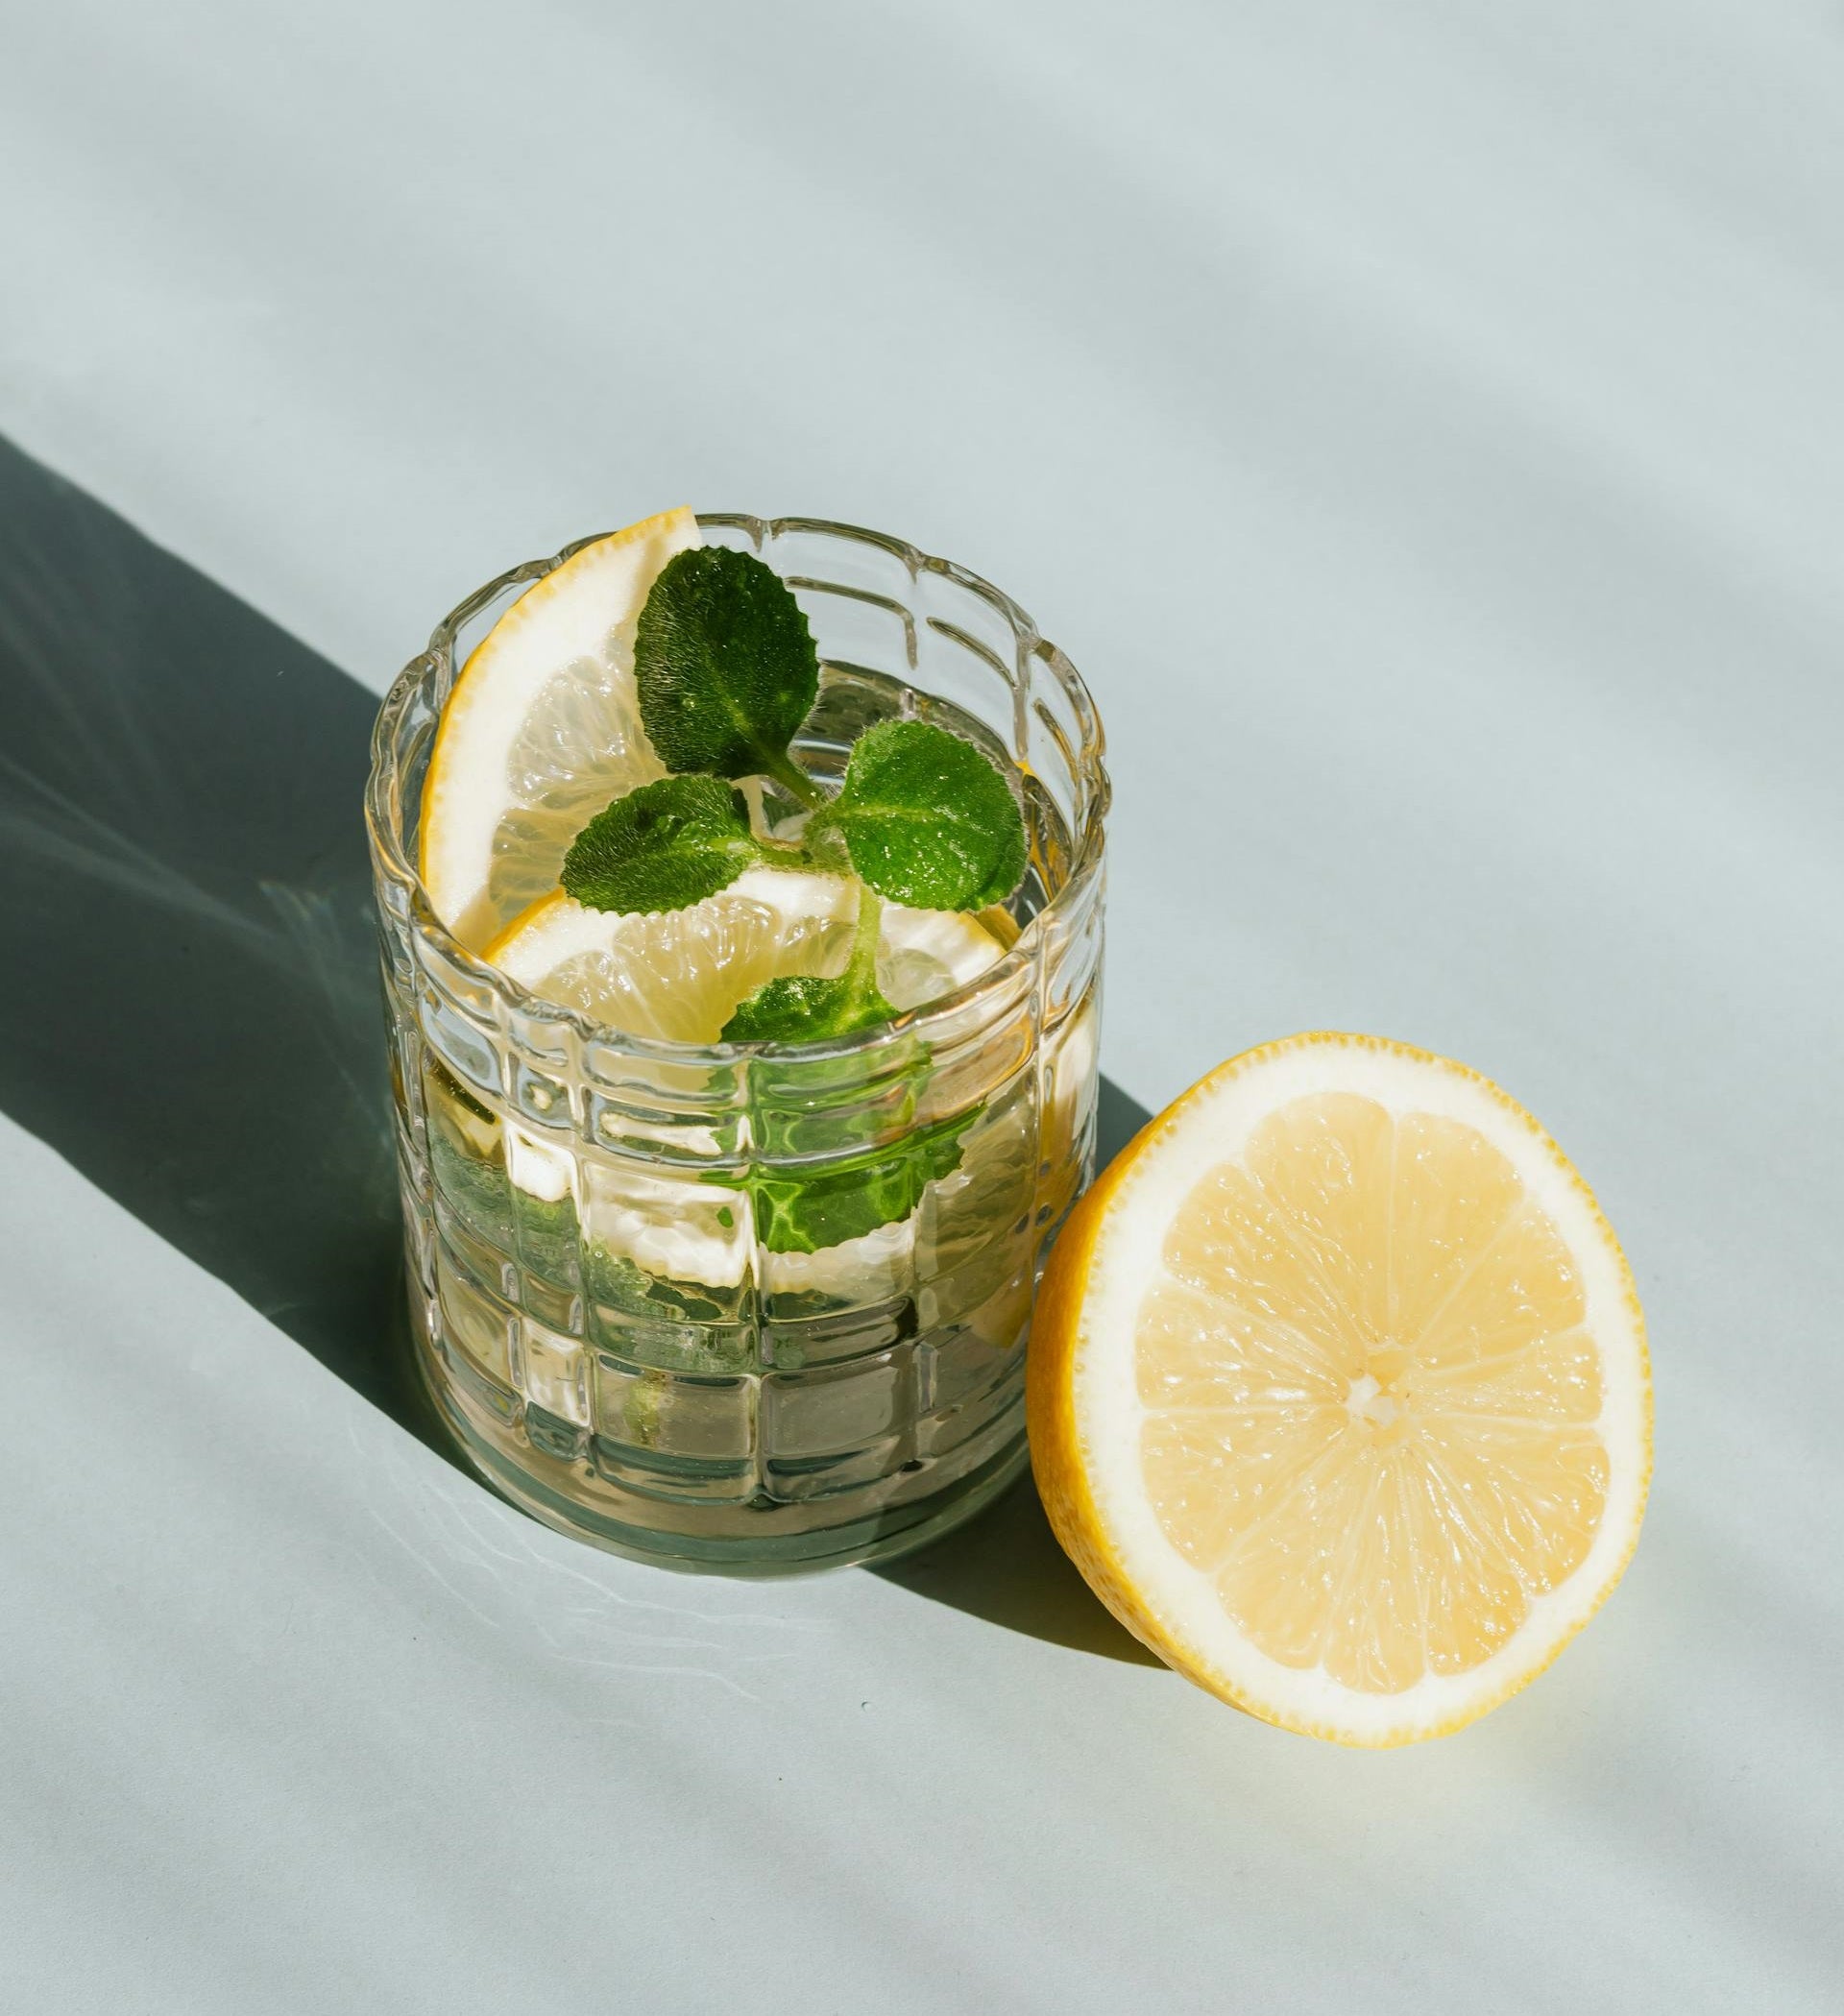 How Long Does A Cut Lemon Last In The Fridge? | Fridge.com